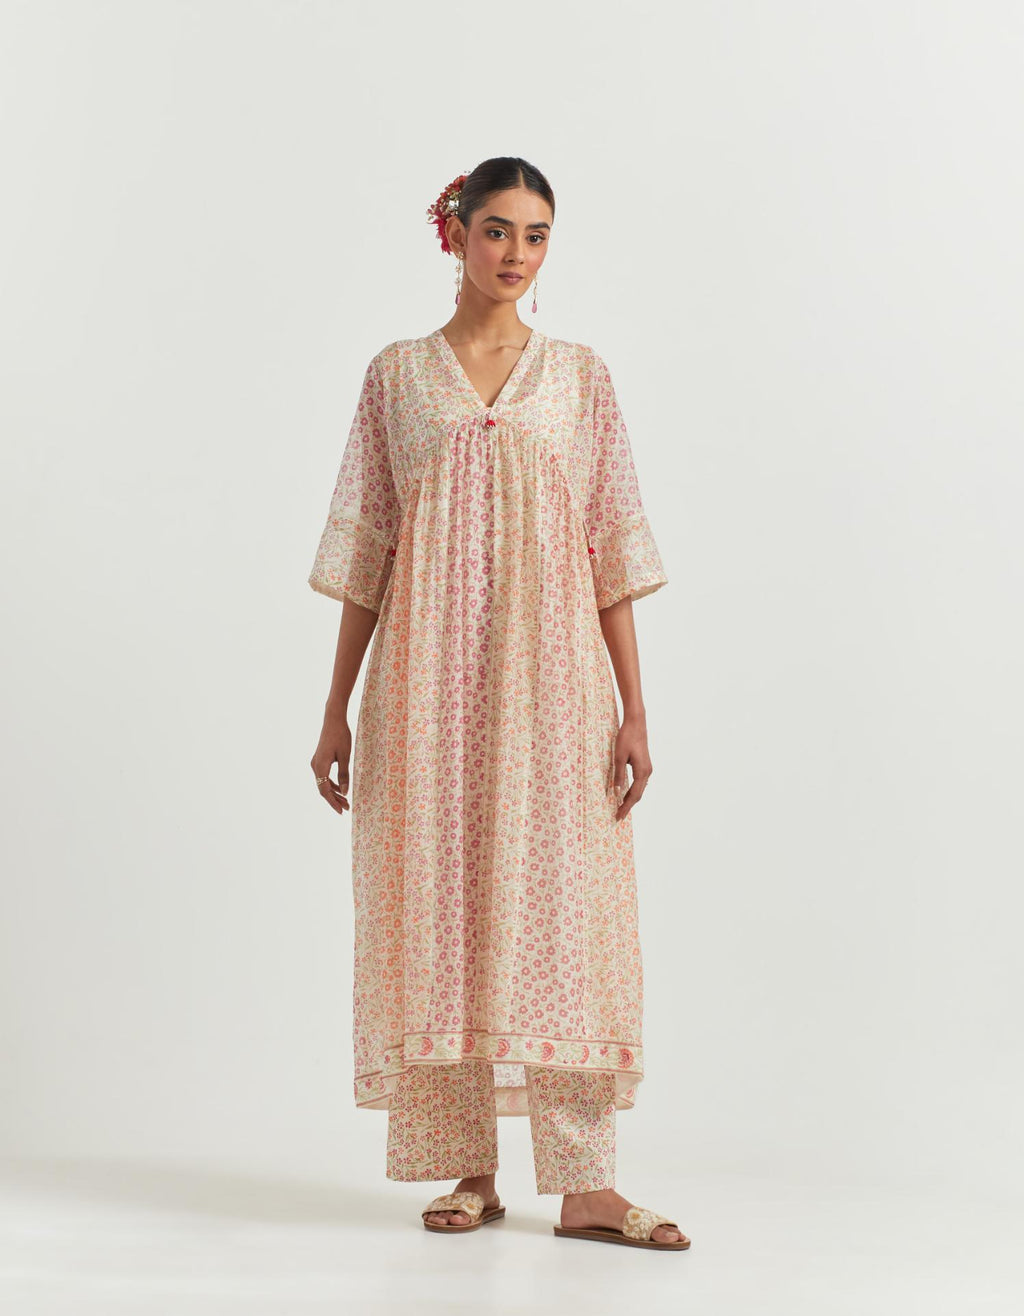 Multi colored hand block printed cotton chanderi kurta dress set with V neck, yoke and fine gathers at empire line.